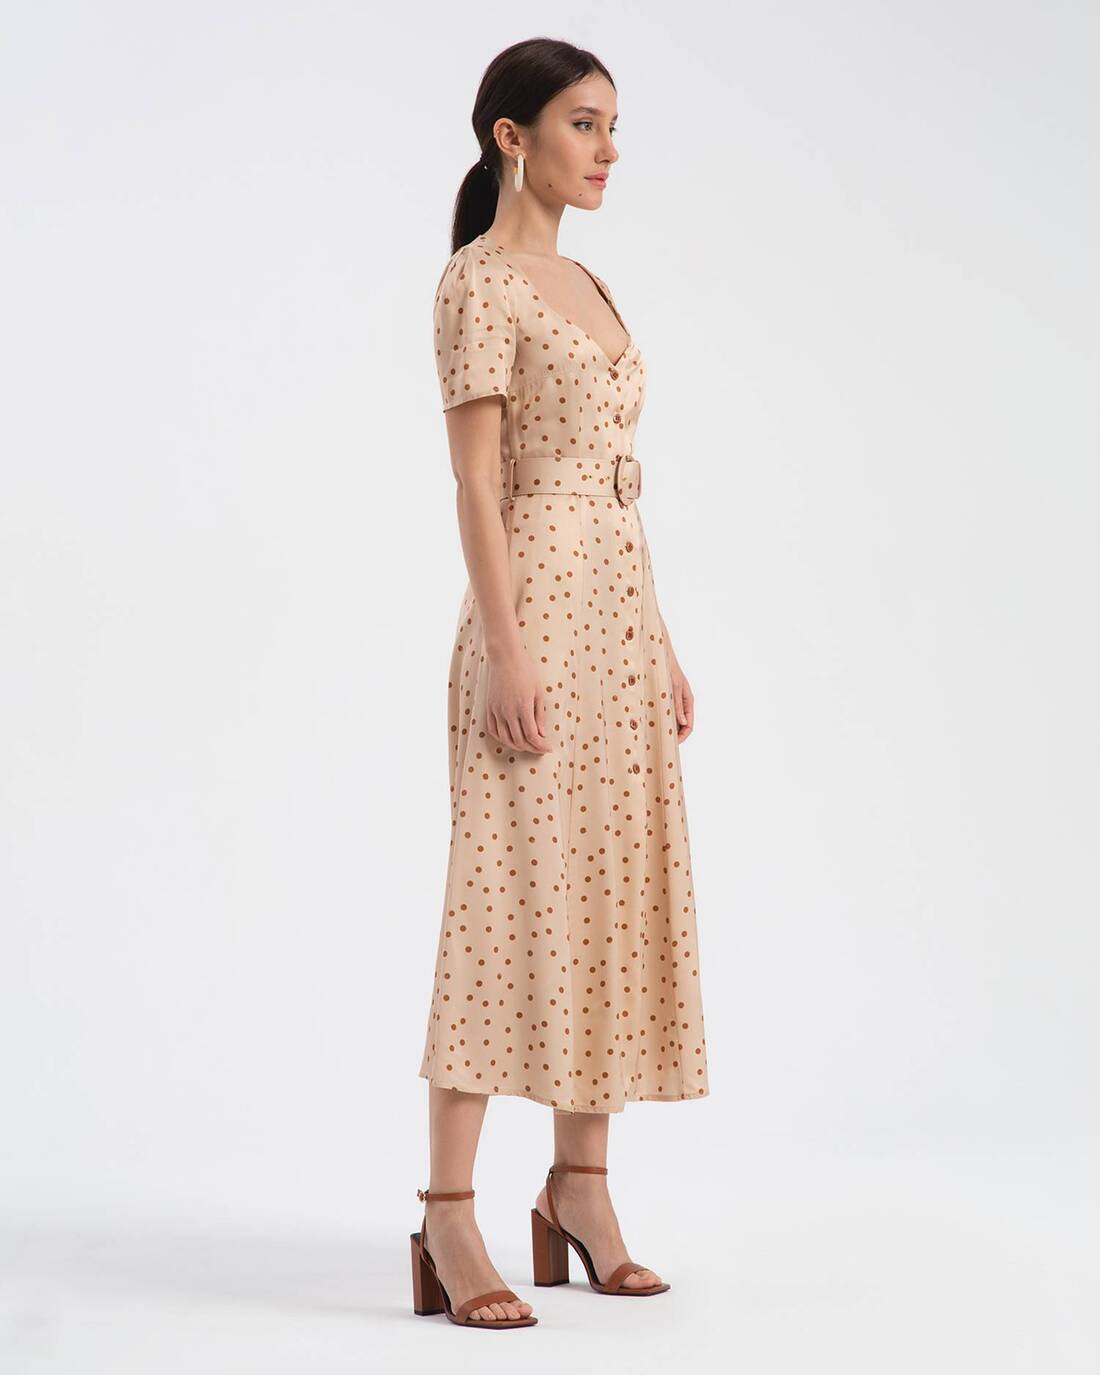 Polka dot dress with square neckline